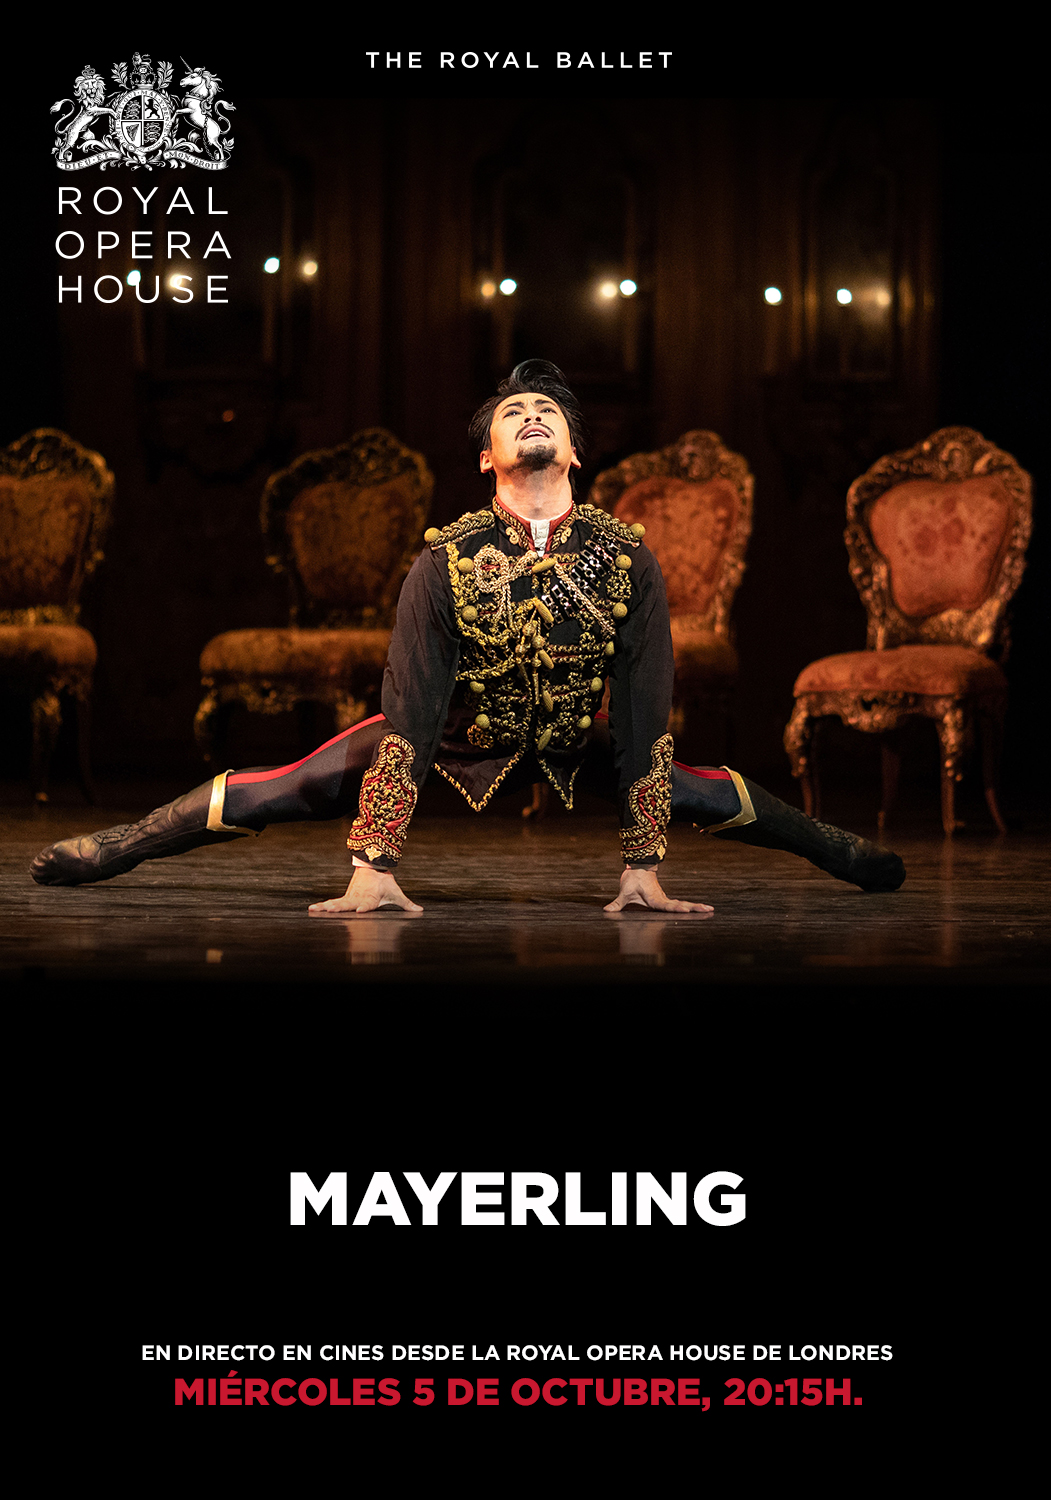 Mayerling (Ballet). The Royal Ballet